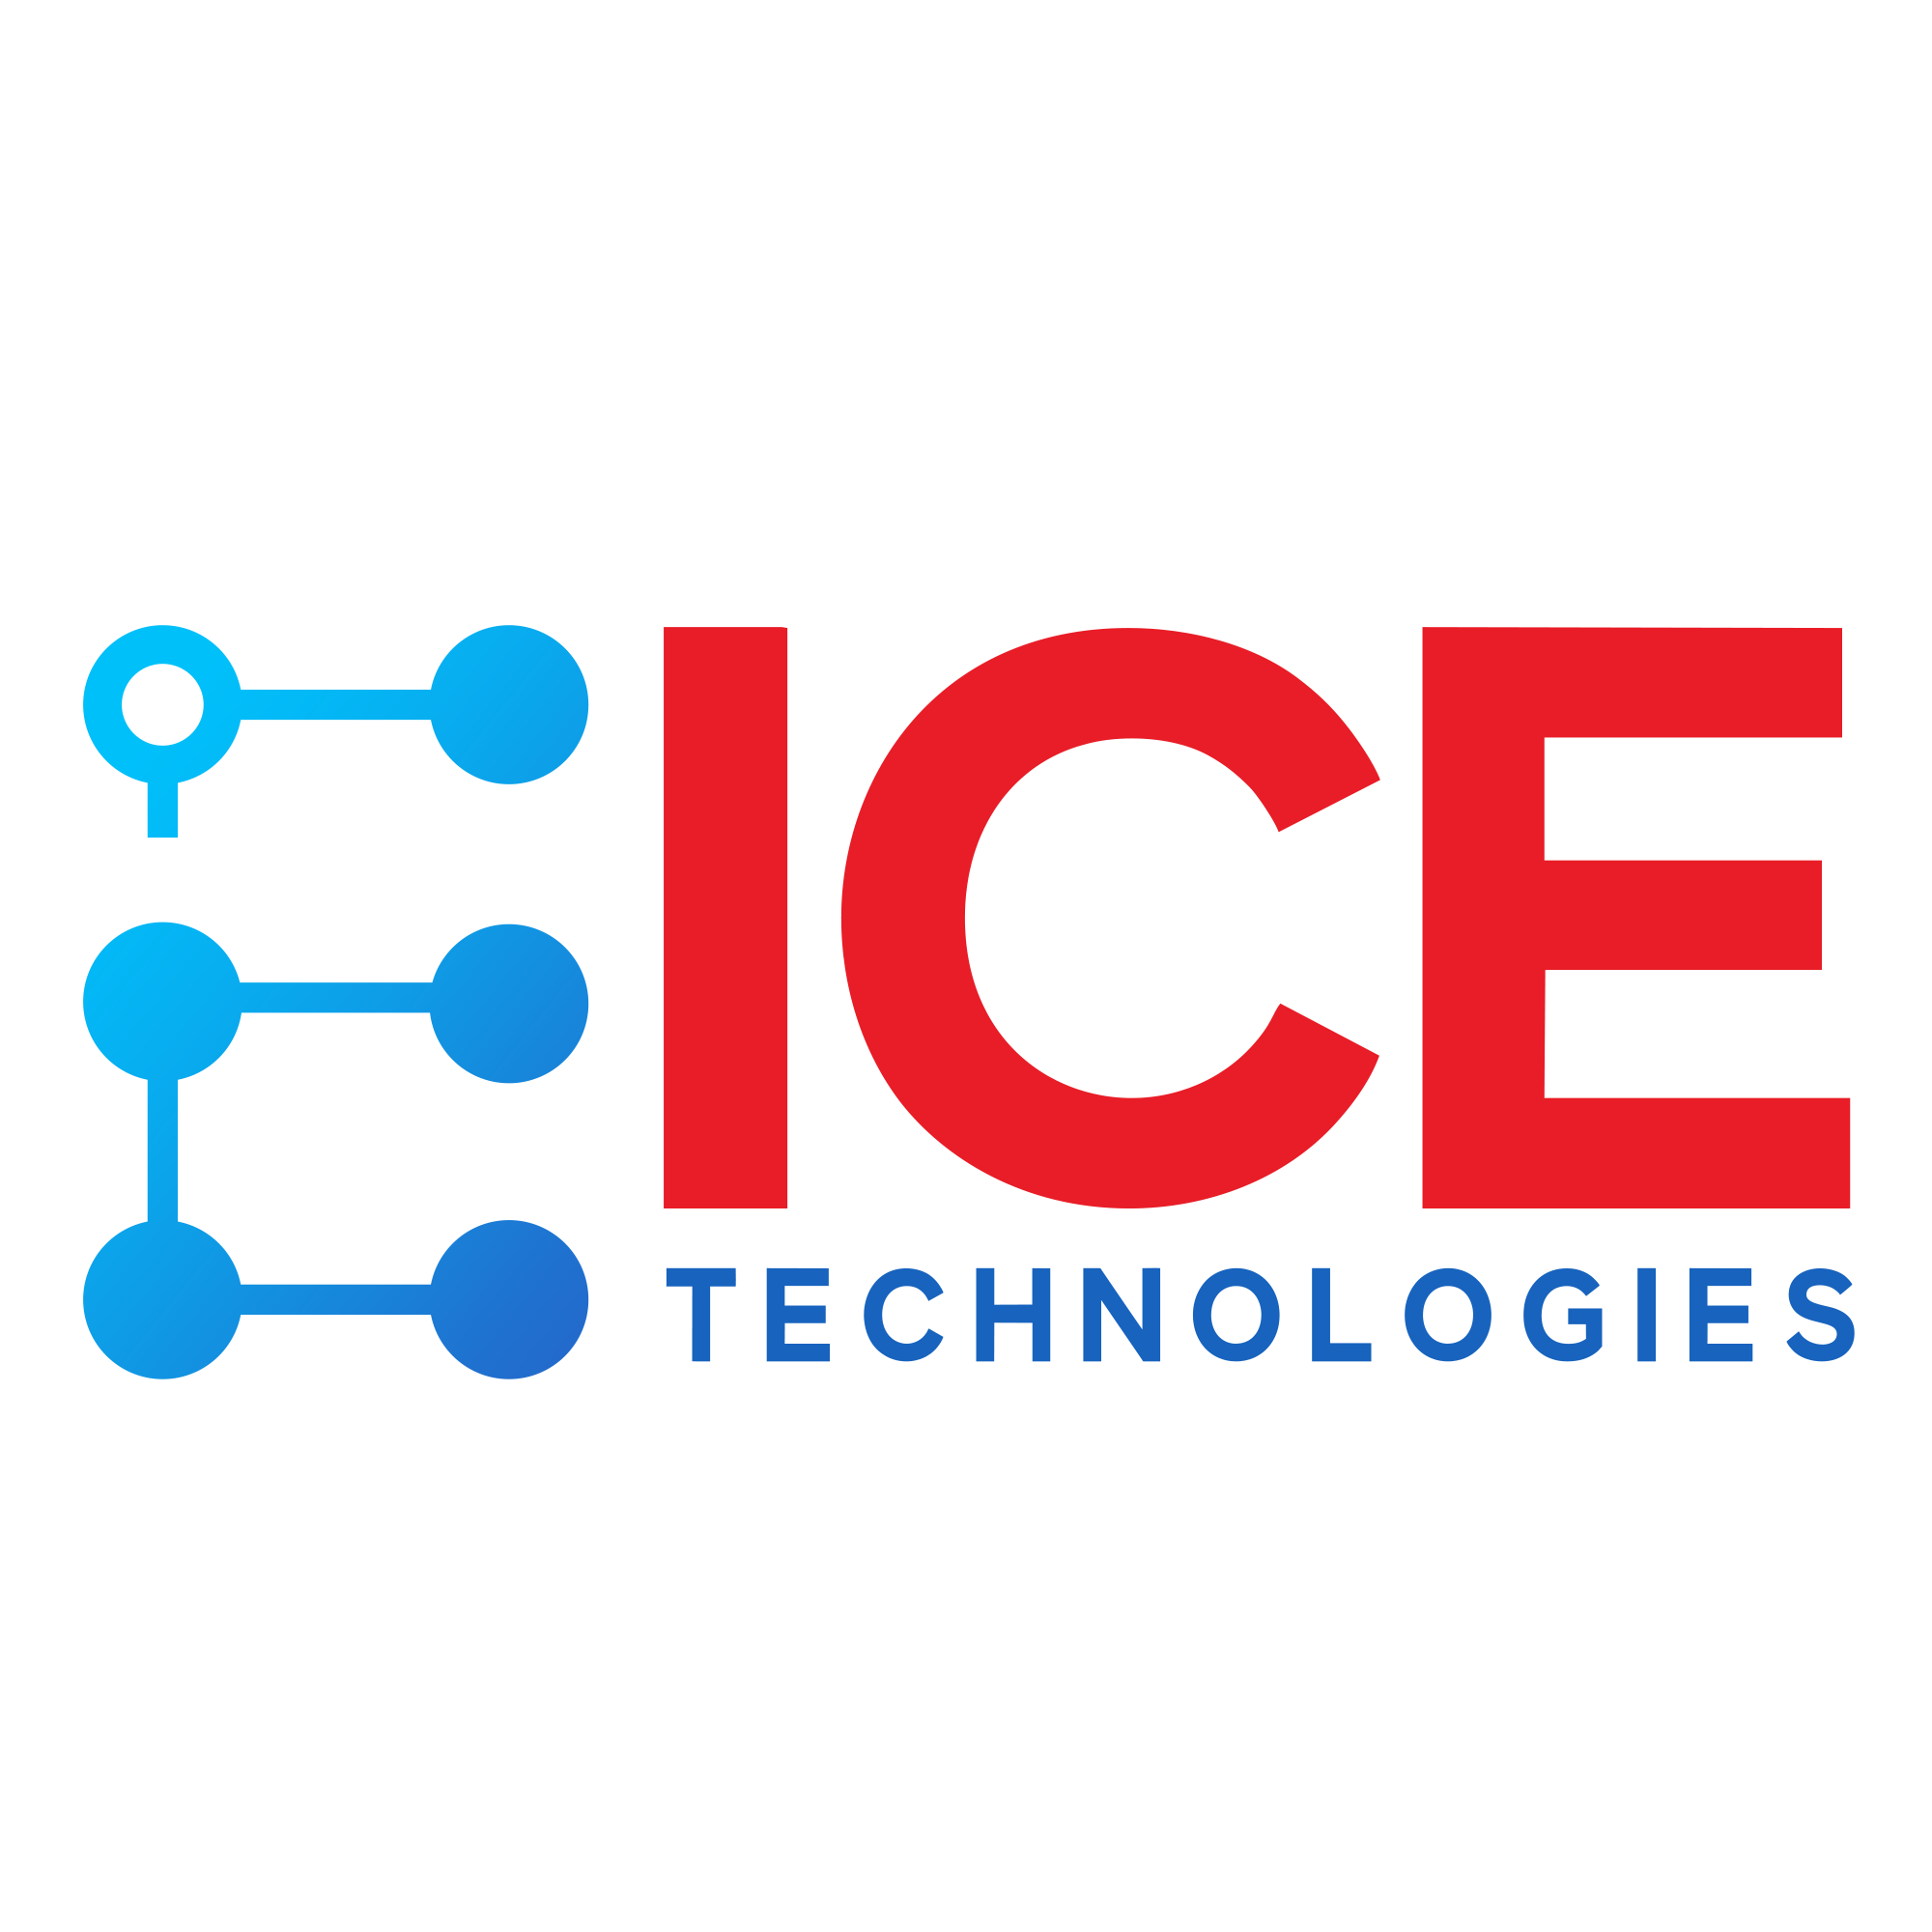 ICE Technologies